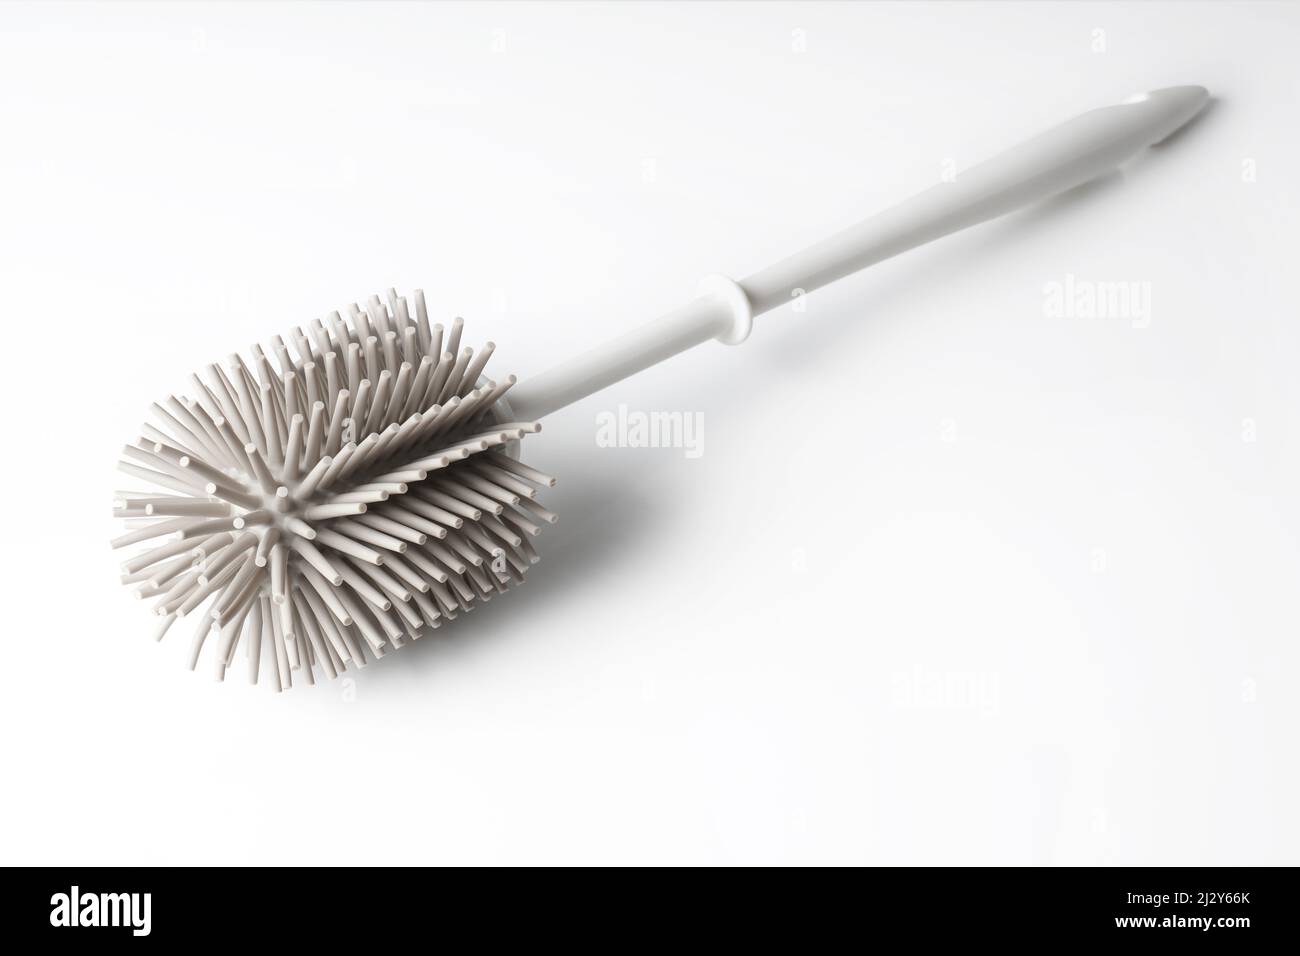 modern toilet brush with silicone bristles Stock Photo